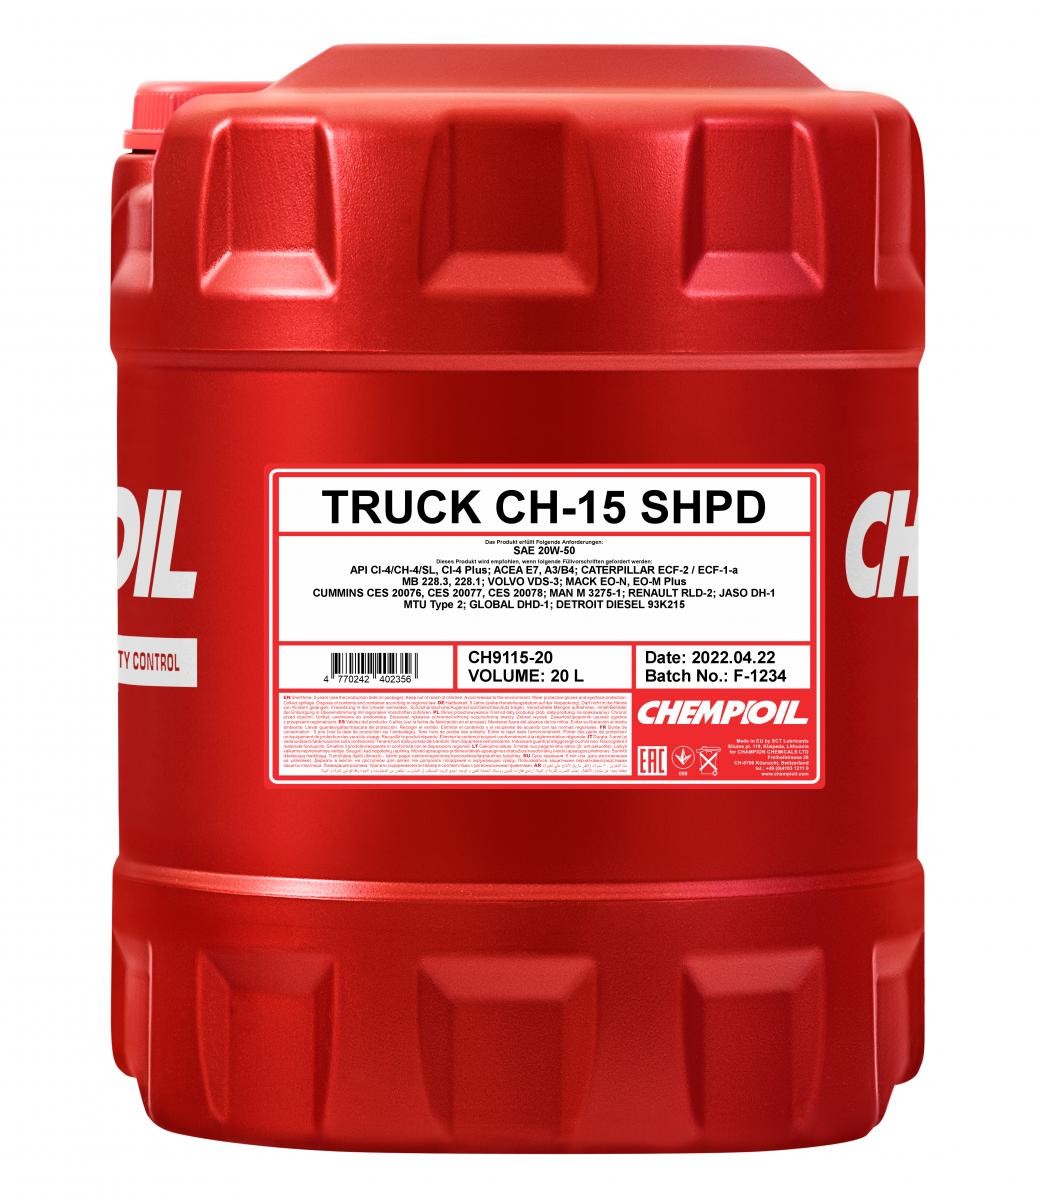 CHEMPIOIL Truck SHPD CH-15 CH9115-20 Transmission fluid MB 228.3